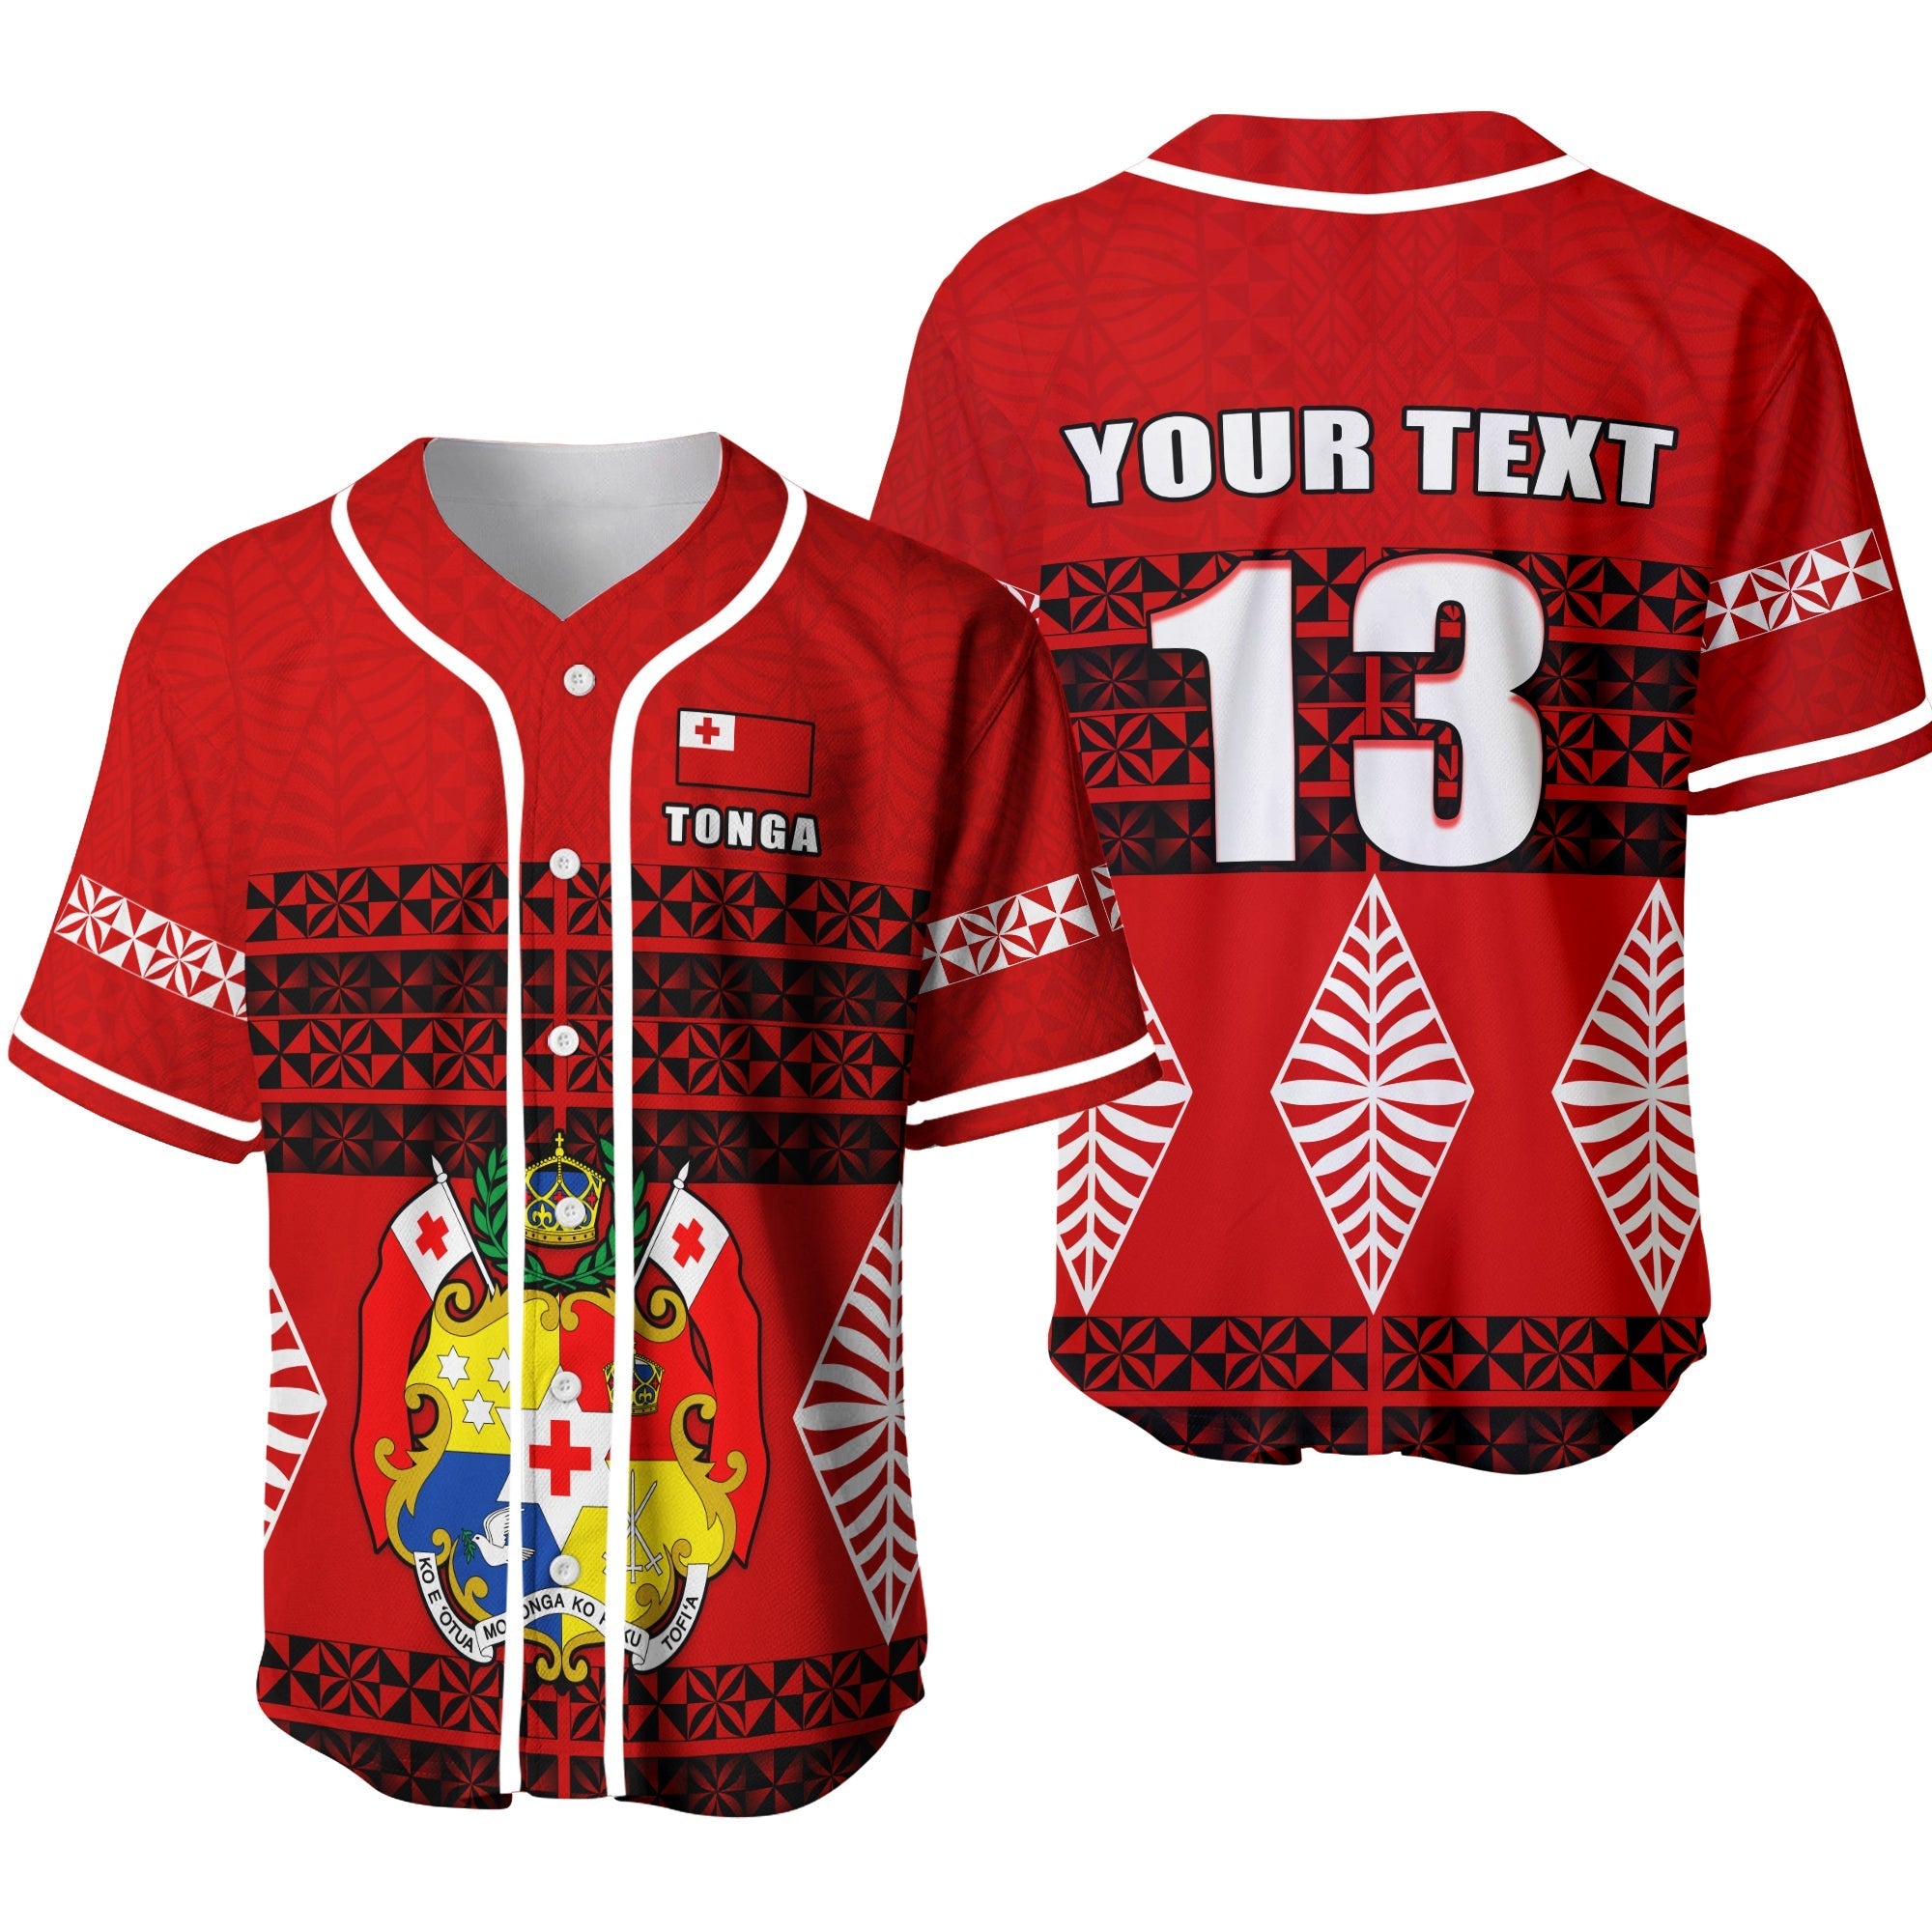 custom-personalised-tonga-baseball-jersey-tongan-pattern-custom-text-and-number